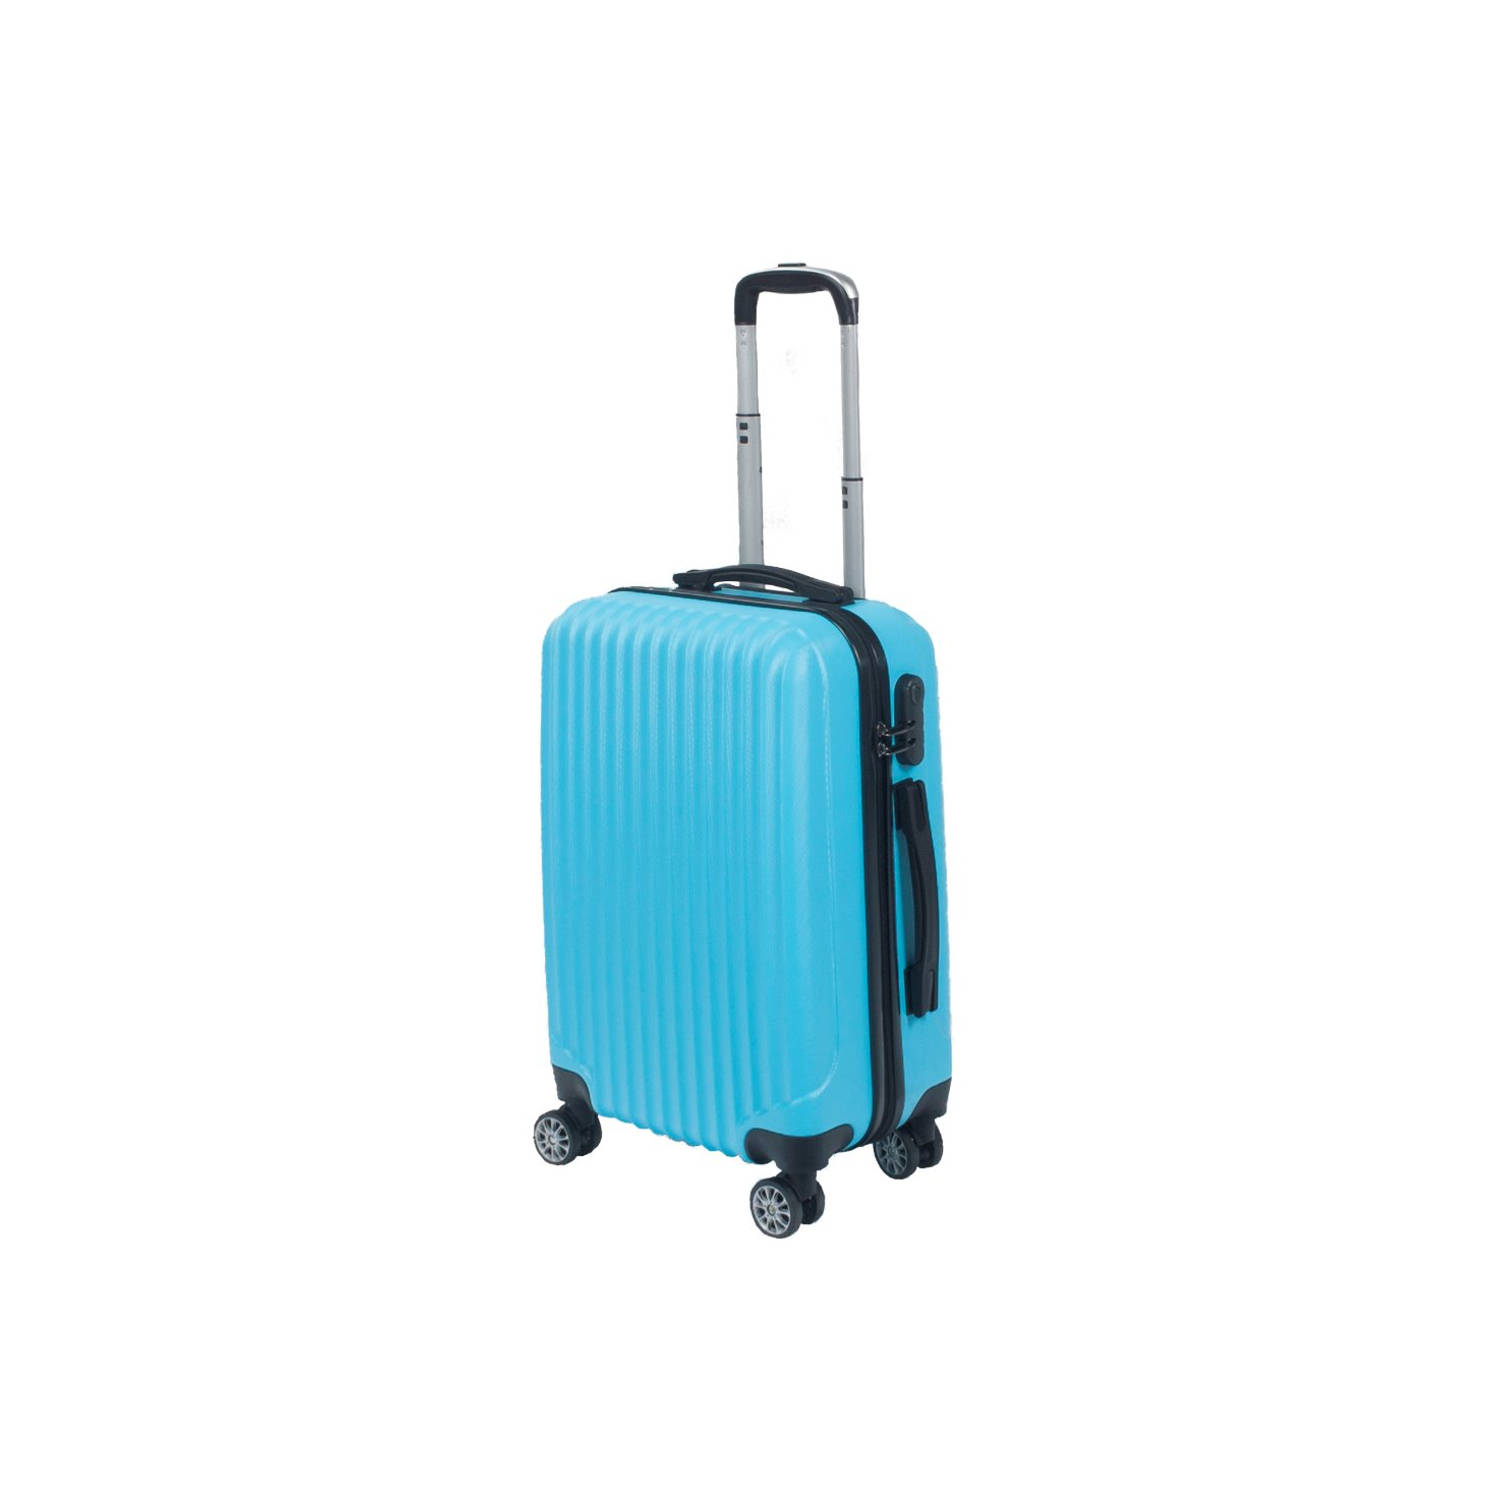 Blaze spoel Ik denk dat ik ziek ben Handbagage koffer 55cm blauw 4 wielen trolley met pin slot | Blokker